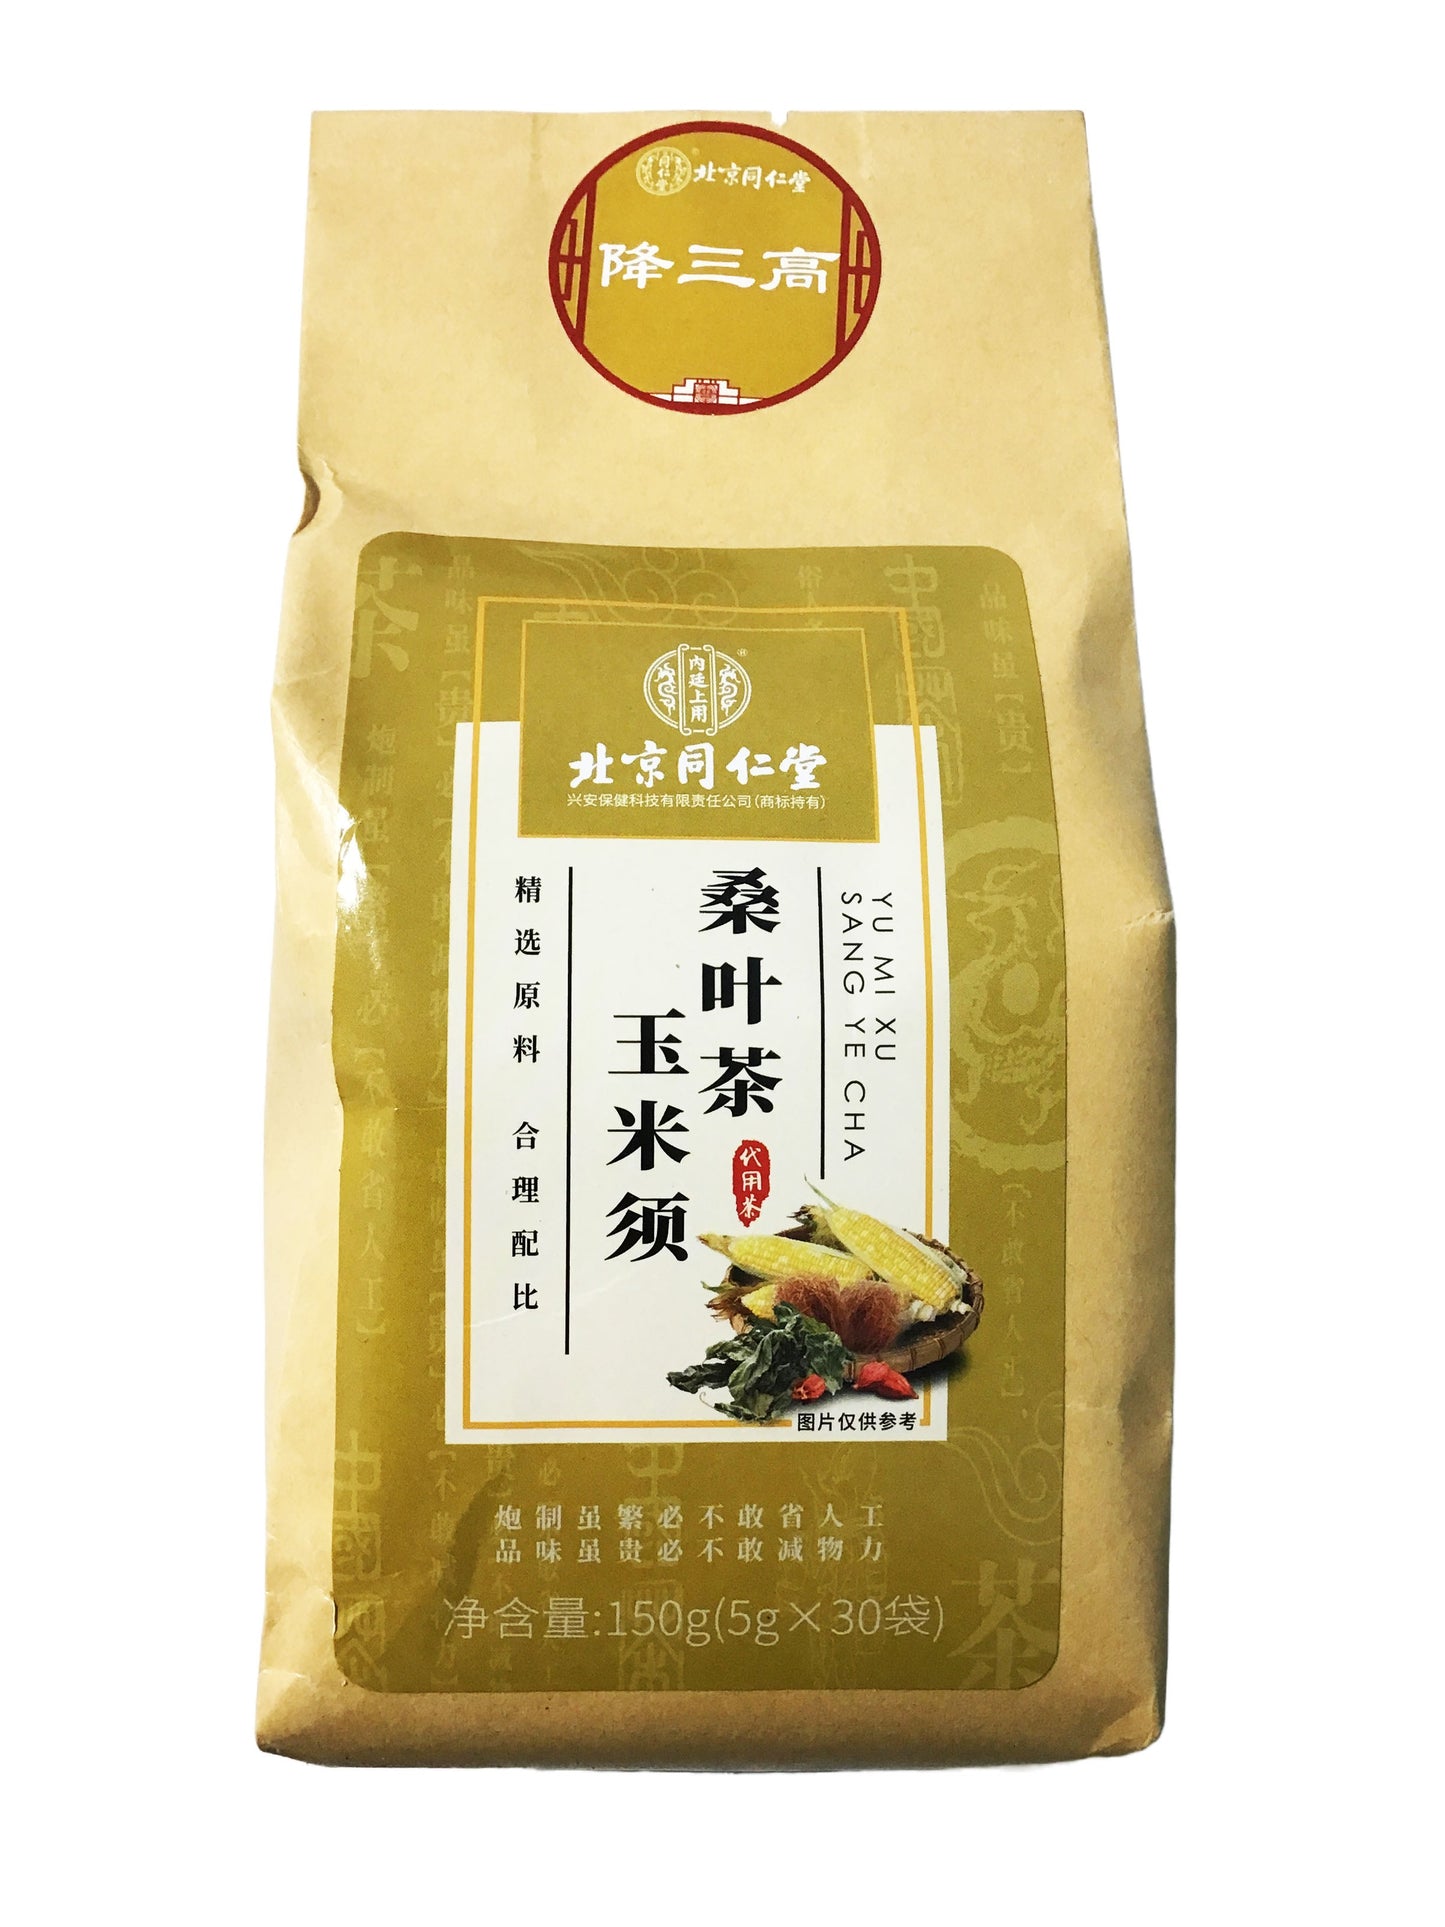 Corn Silk Mulberry Tea 北京同仁堂 玉米须桑叶茶 5g x 30 bags